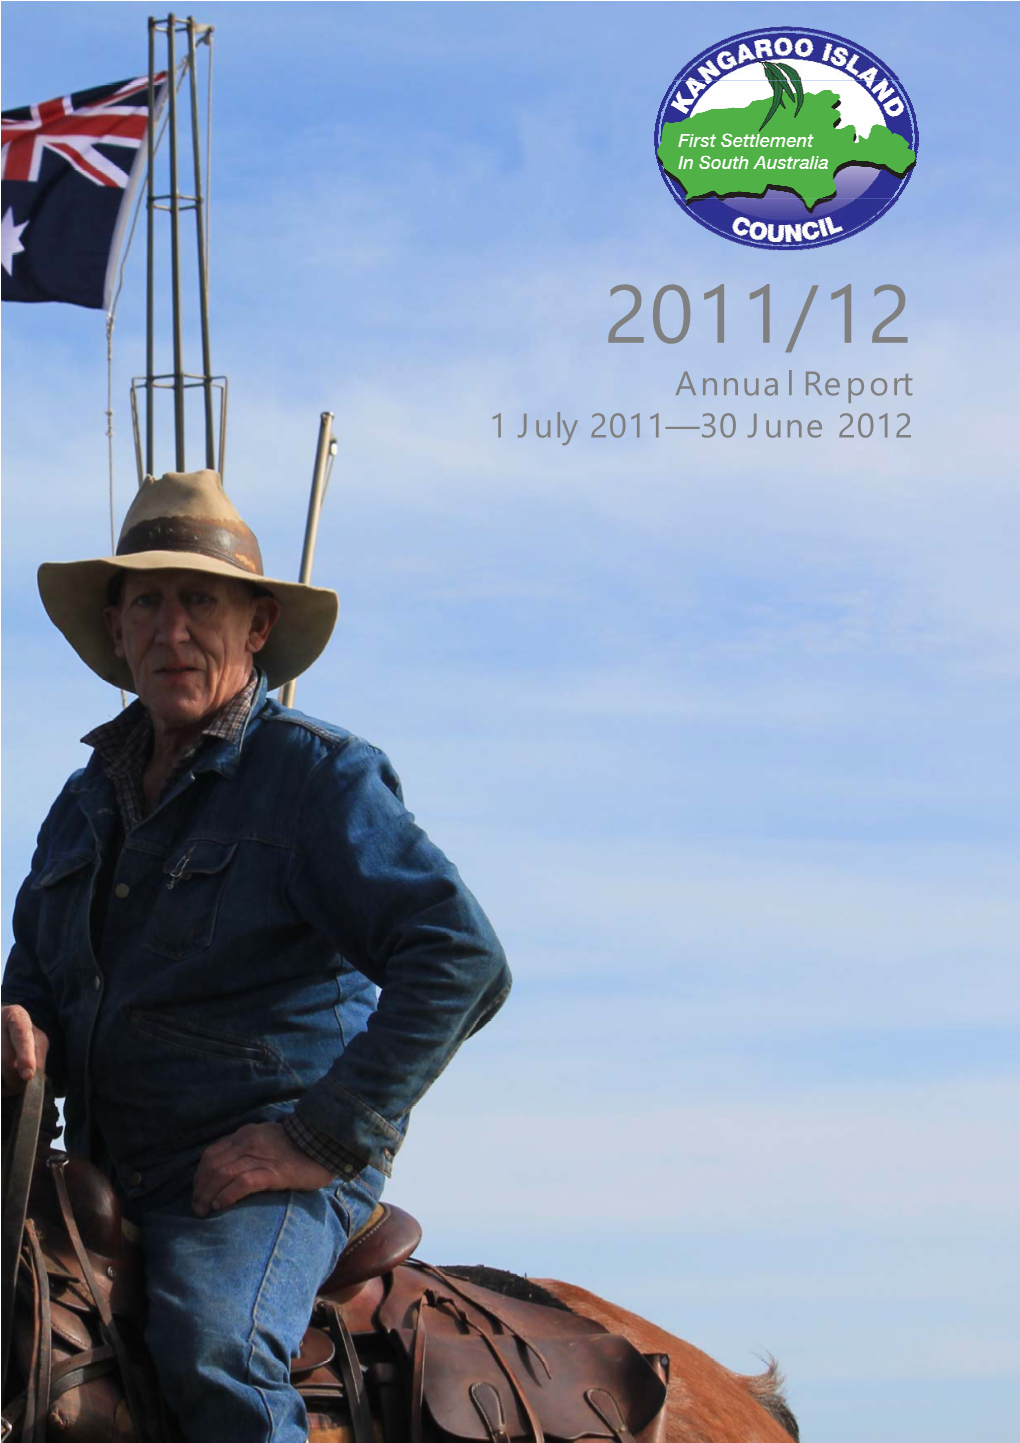 Annual Report 1 July 2011—30 June 2012 Kangaroo Island Council - Annual Report 2011-12